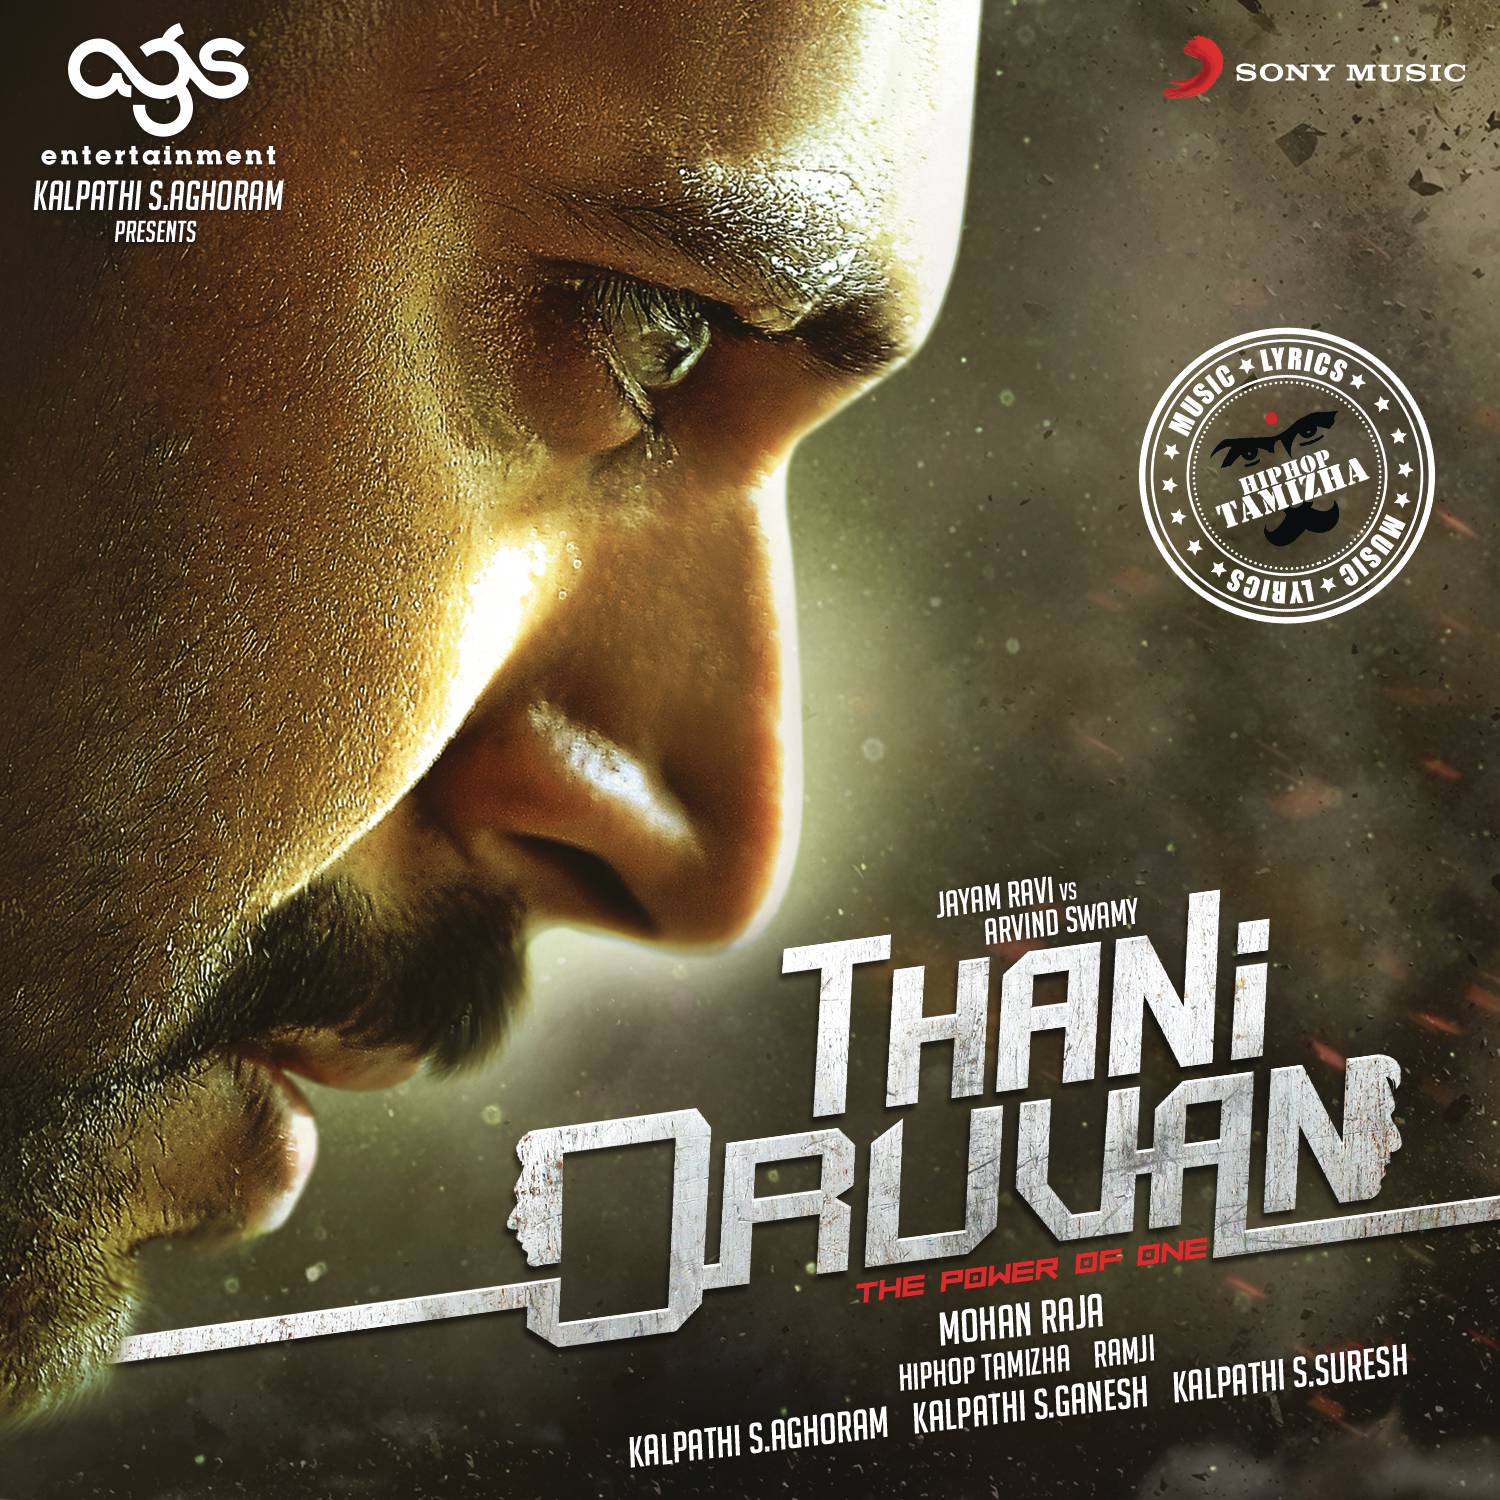 Thani Oruvan(The Power of One)